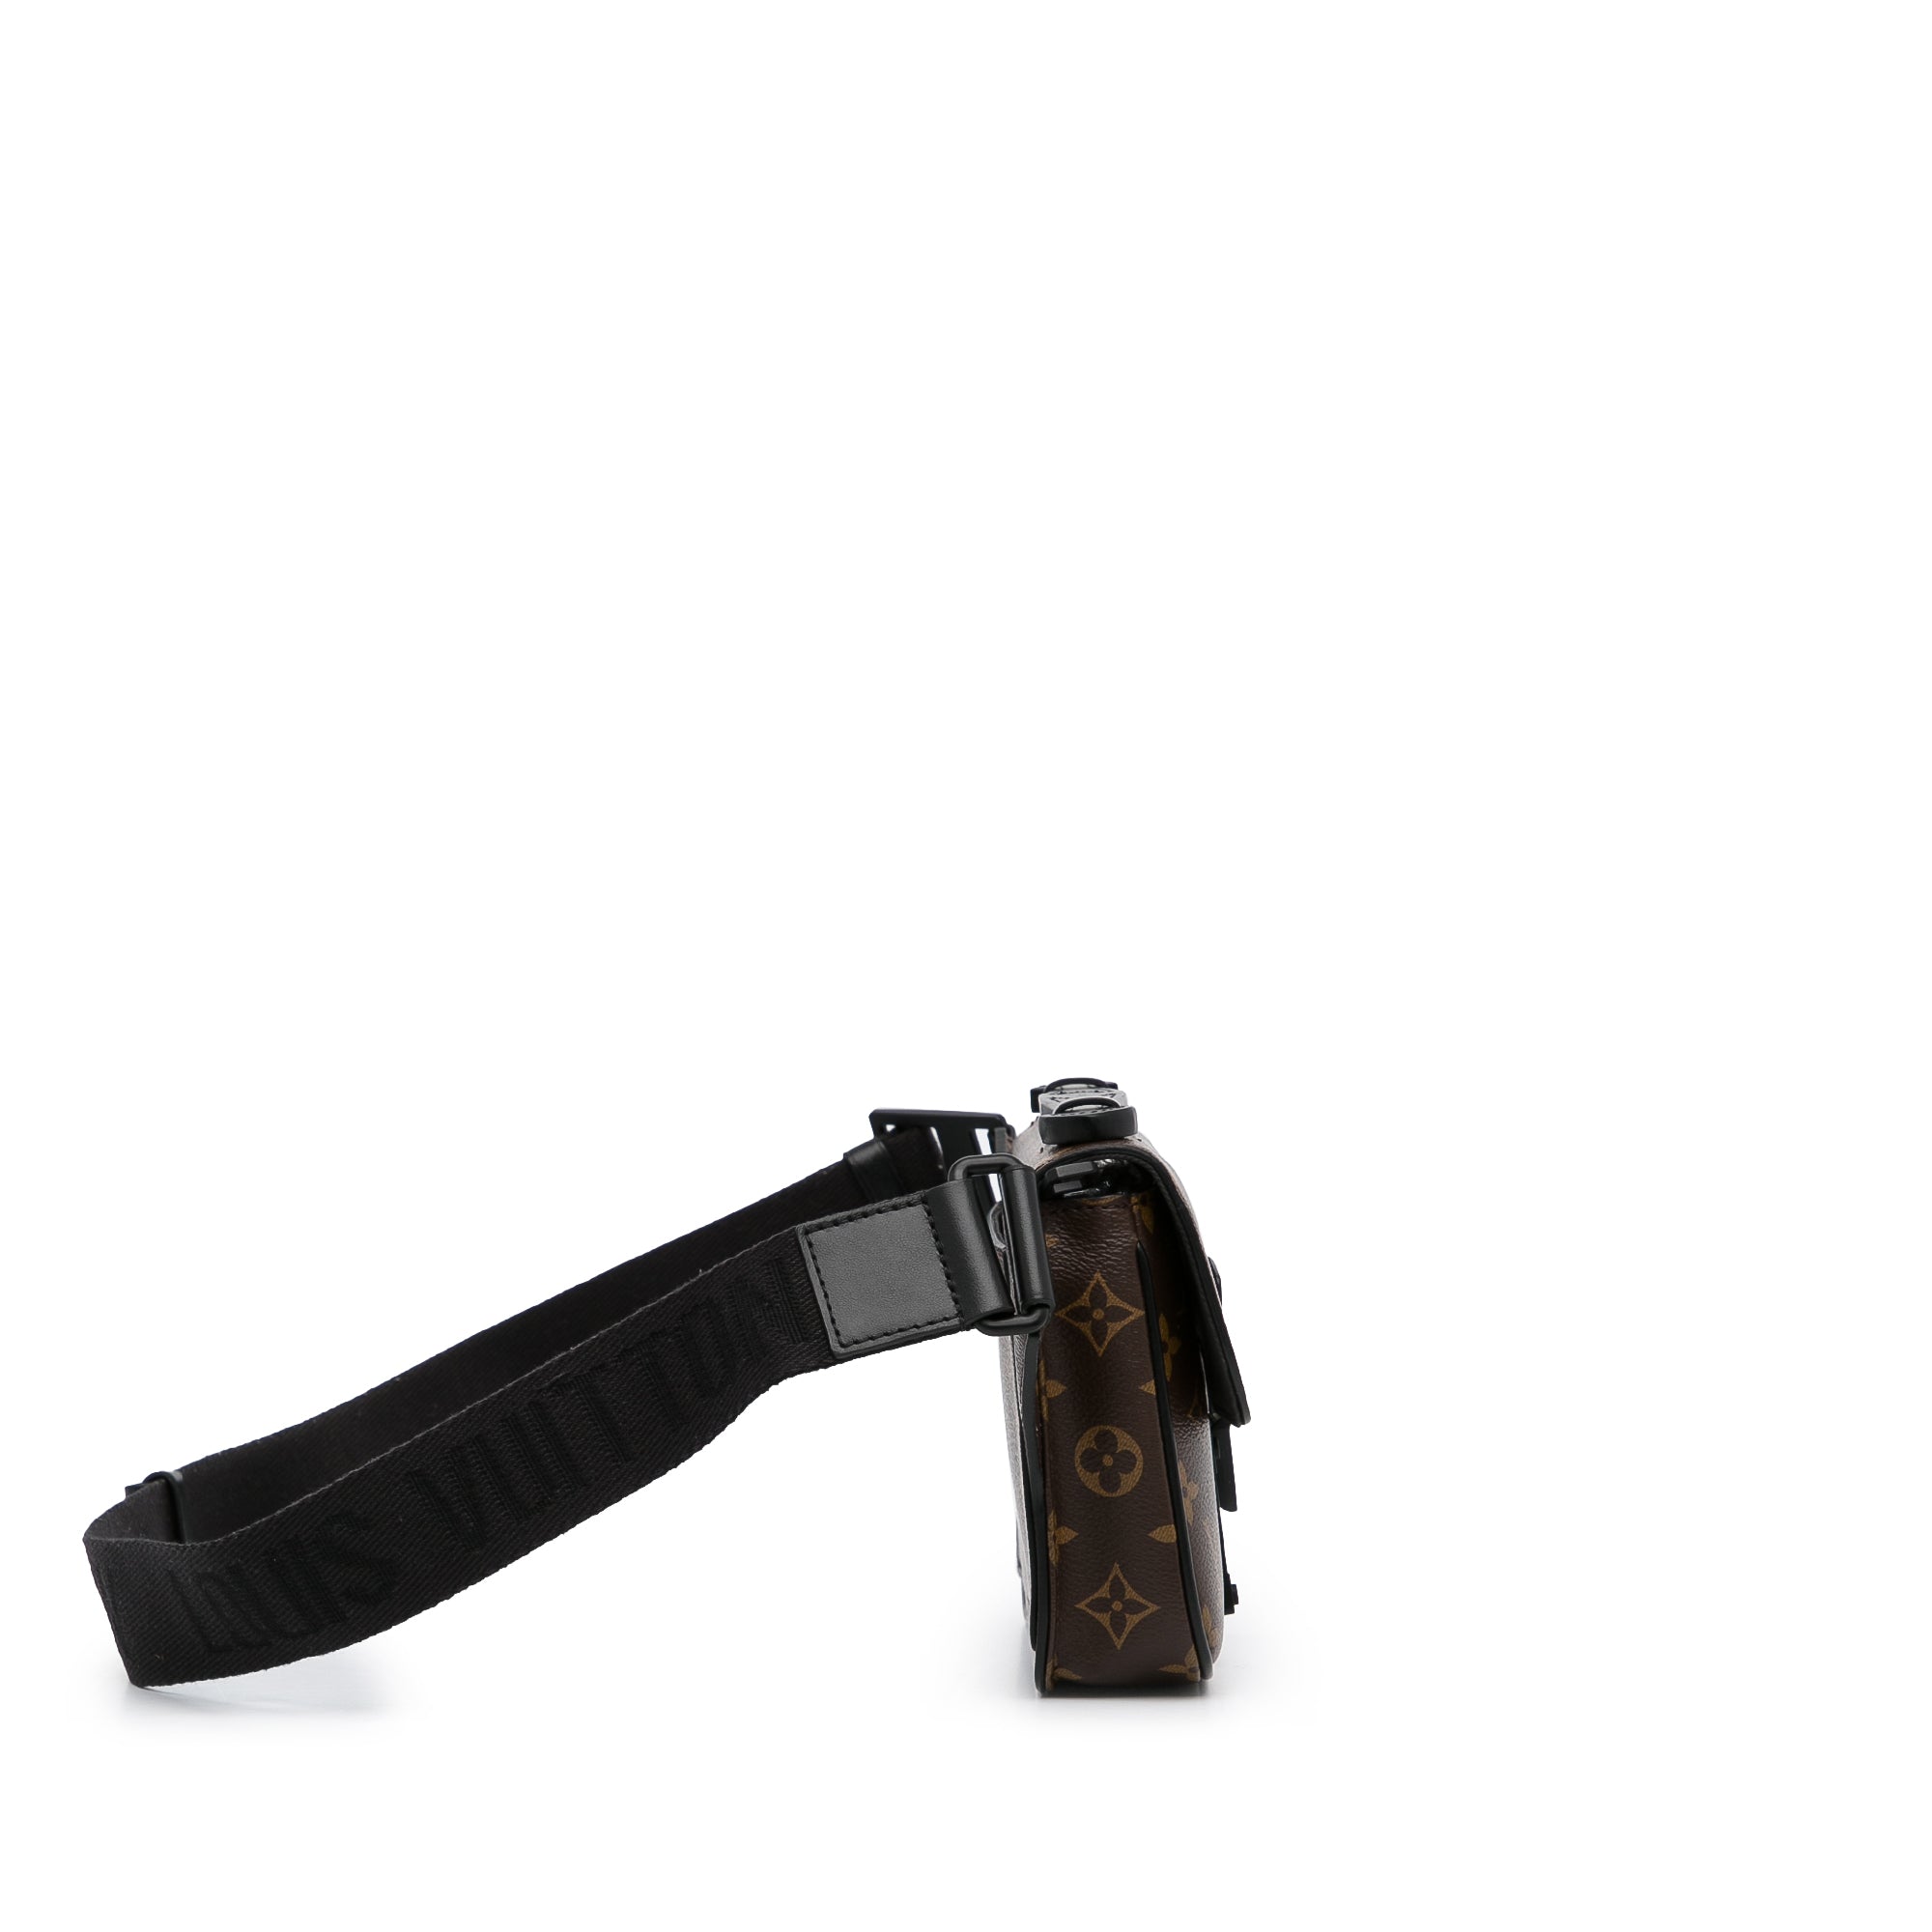 Louis Vuitton Monogram S Lock Belt Pouch - Brown Waist Bags